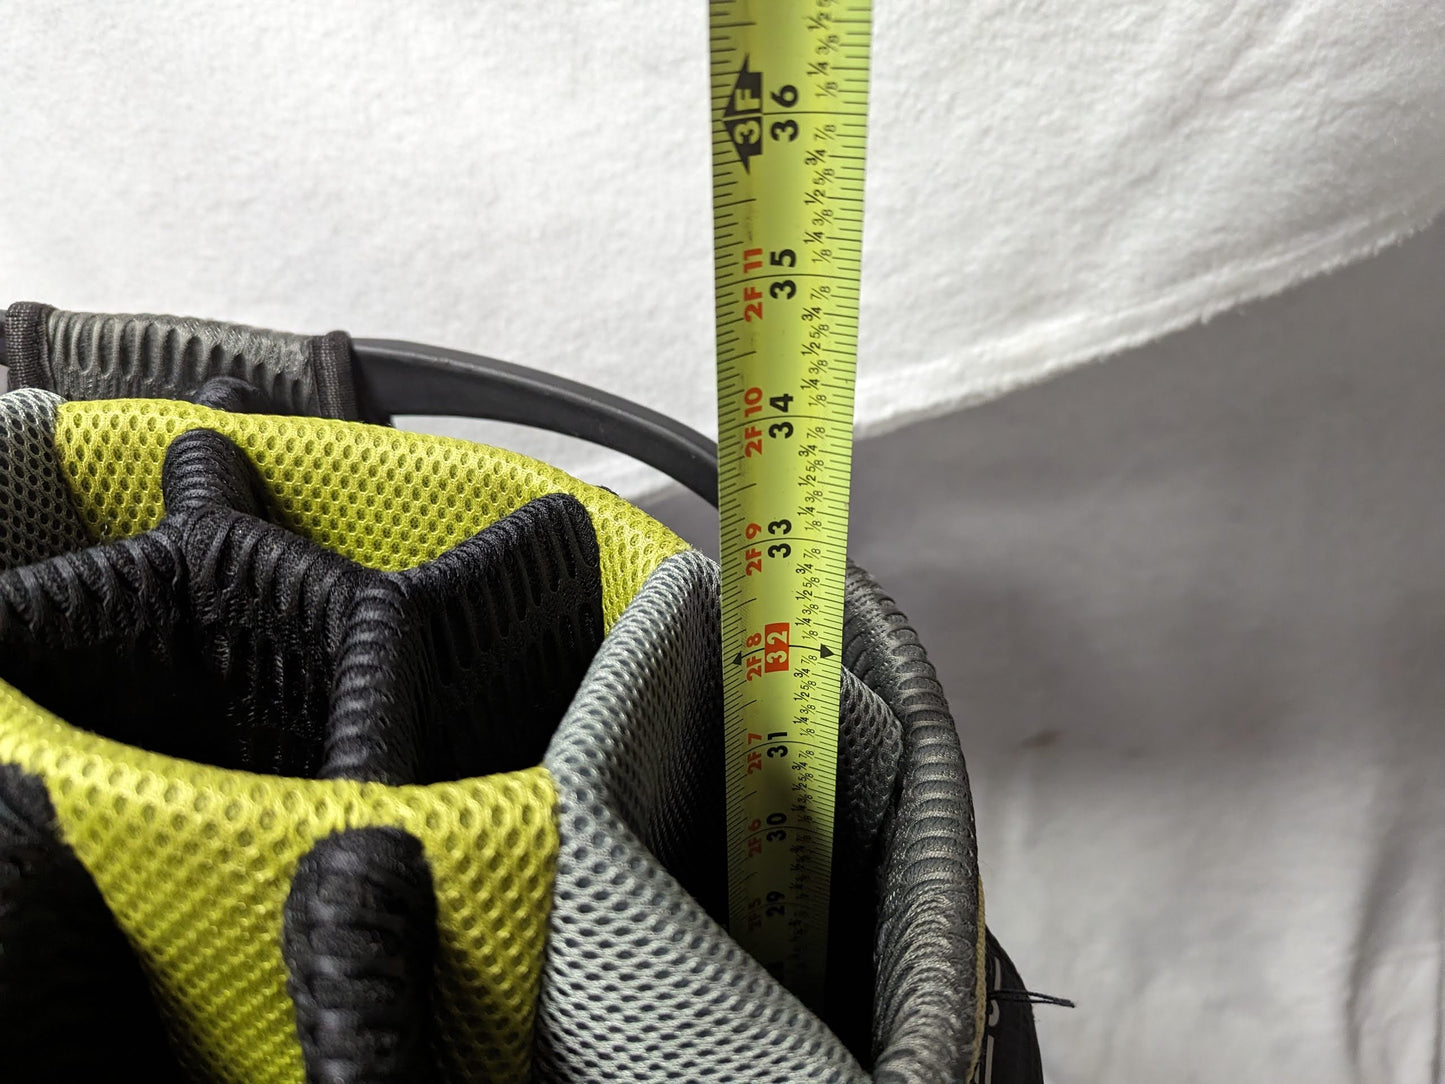 TechEdge HL3 Golf Bag (Broken Zipper) Size 32 In Color Black Condition Used